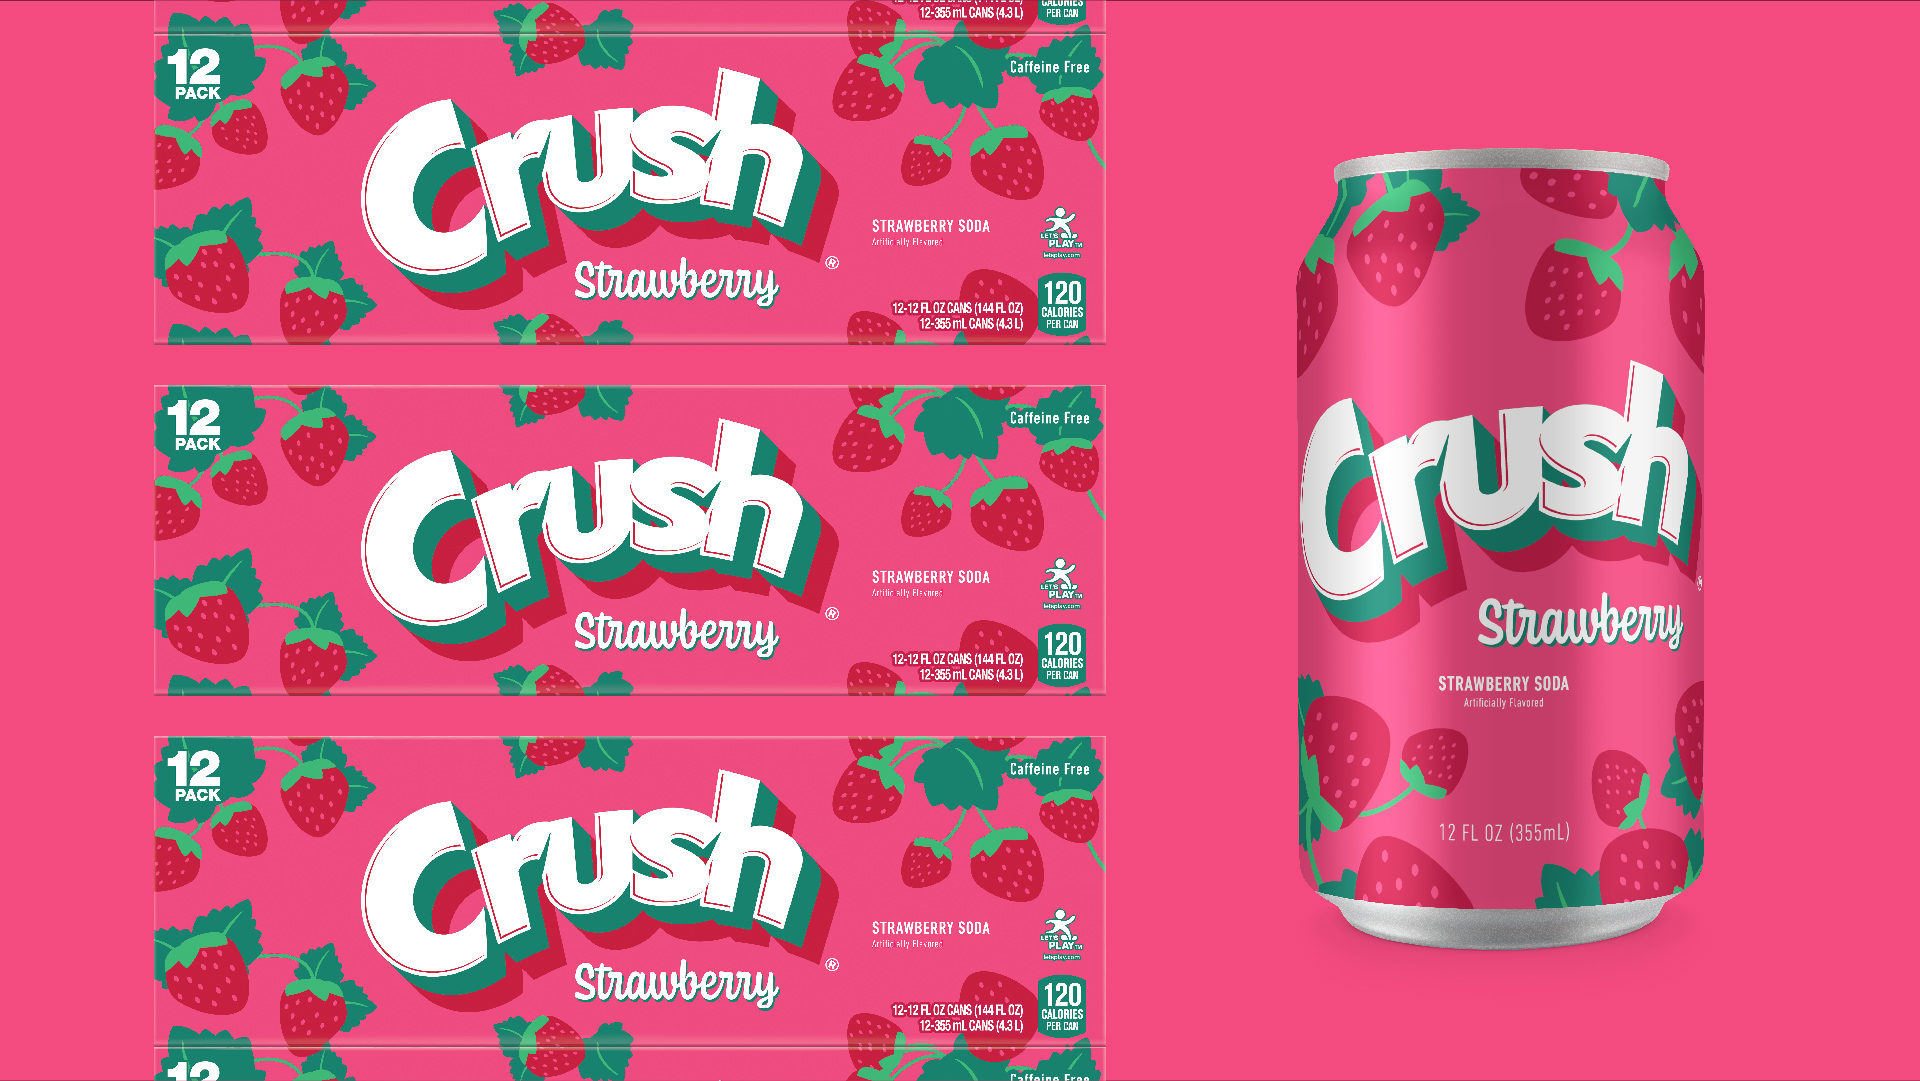 Crush Soda S Refreshingly Fun New Look By Connor Arnot Liquid Sunshine World Brand Design Society